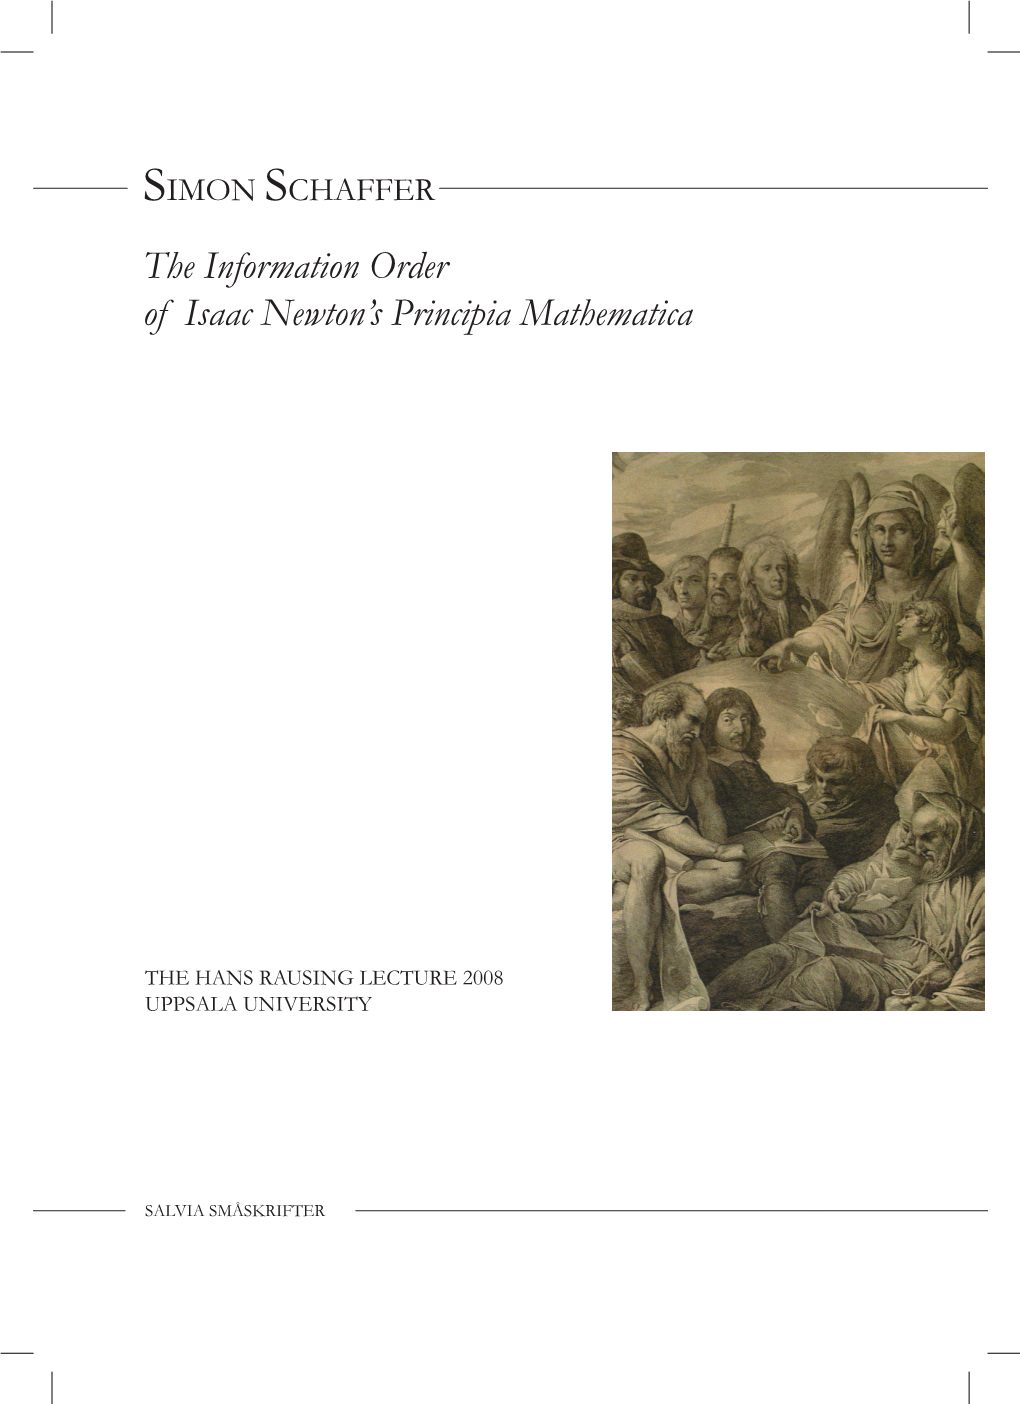 The Information Order of Isaac Newton's Principia Mathematica